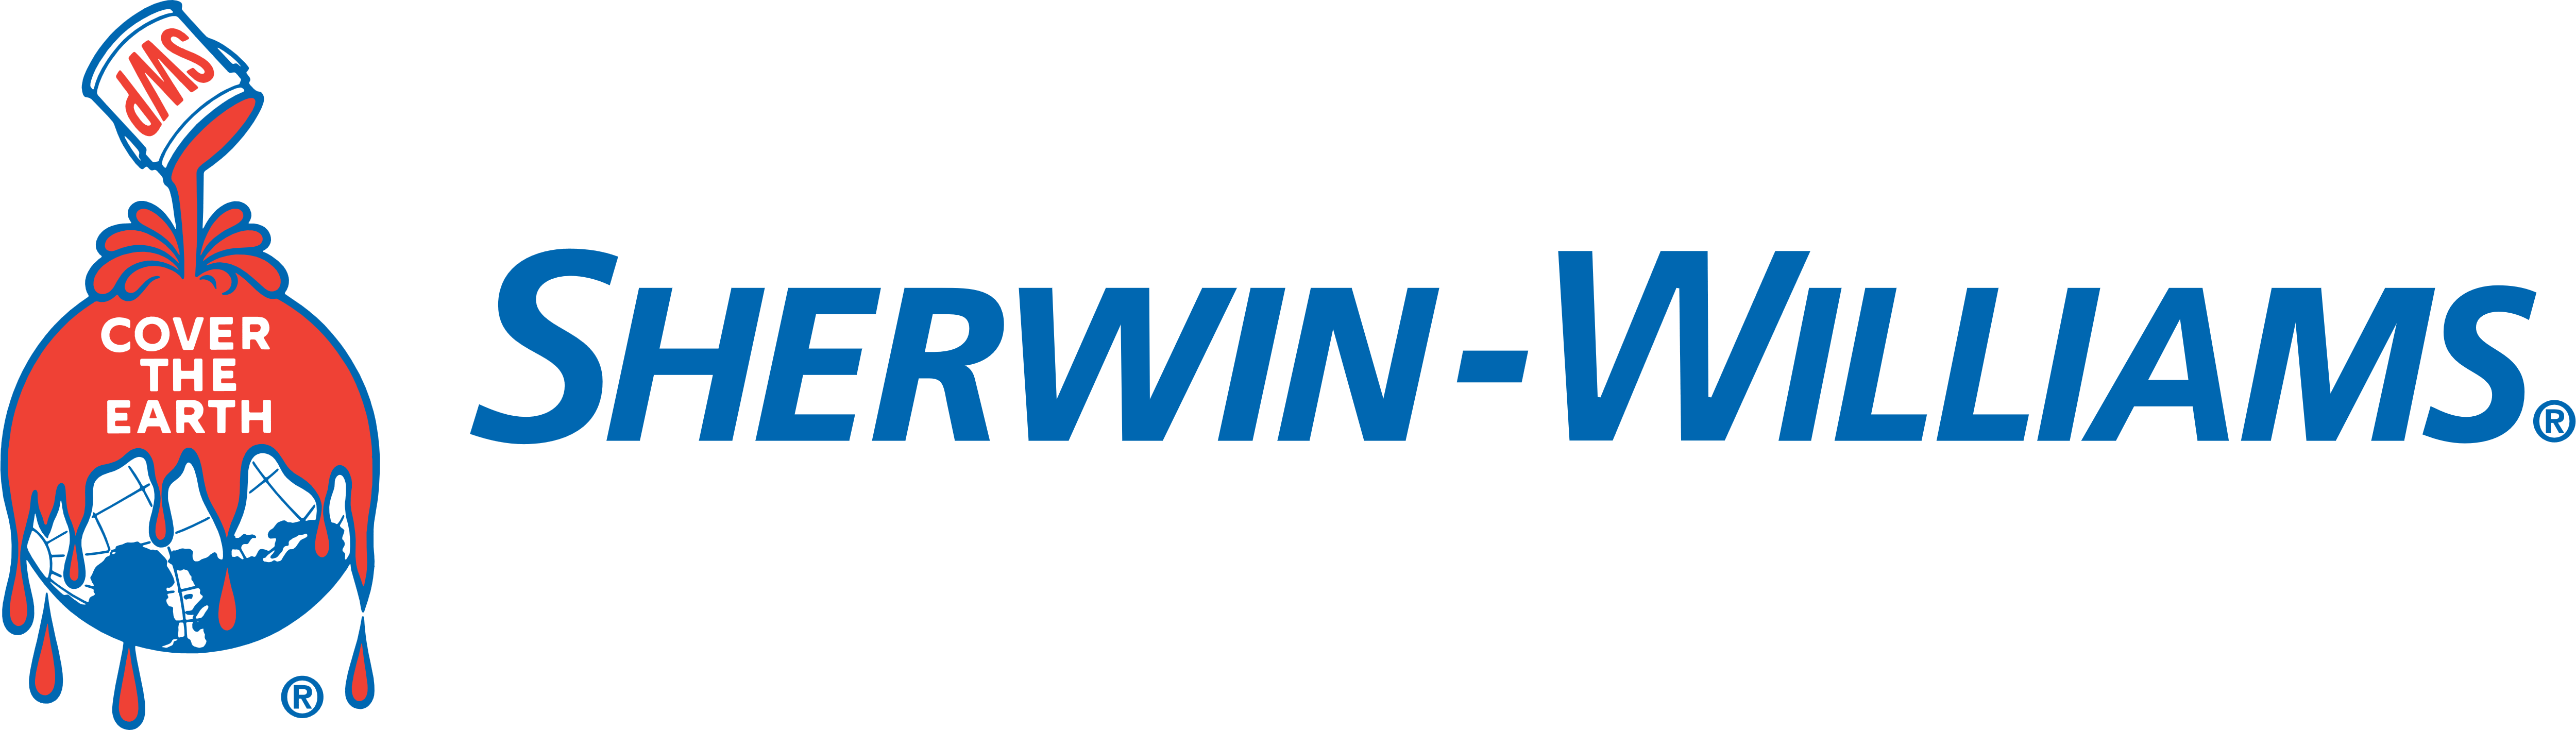 Sherwin-williams Logos Png Vector - Sherwin Williams Logo (5000x1417), Png Download